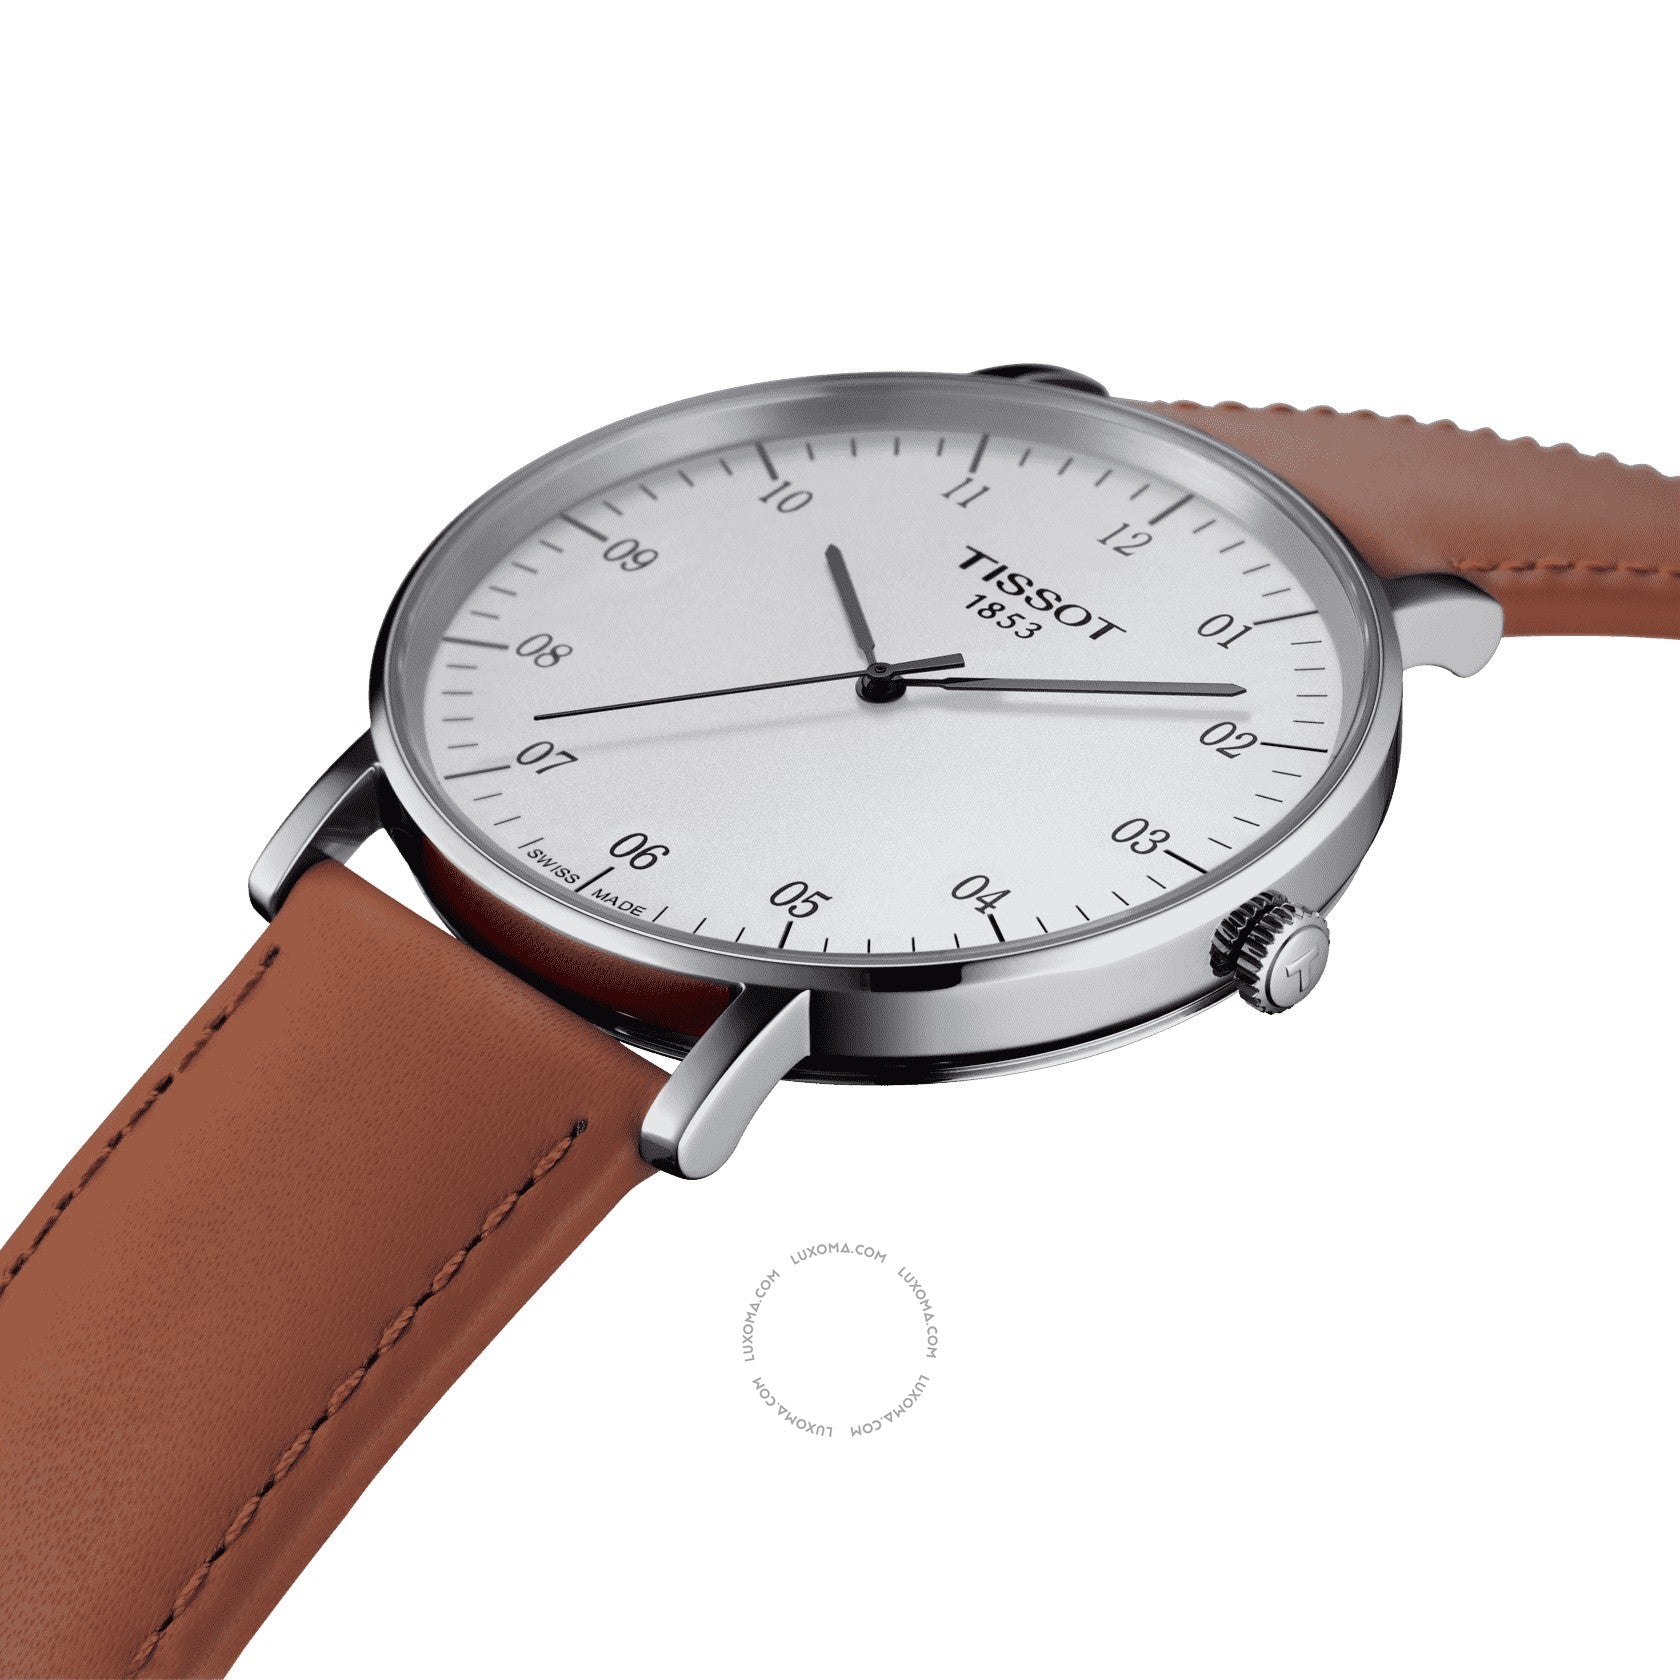 Tissot Tissot T-Classic Everytime Quartz Silver Dial Men's Watch T109.610.16.037.00